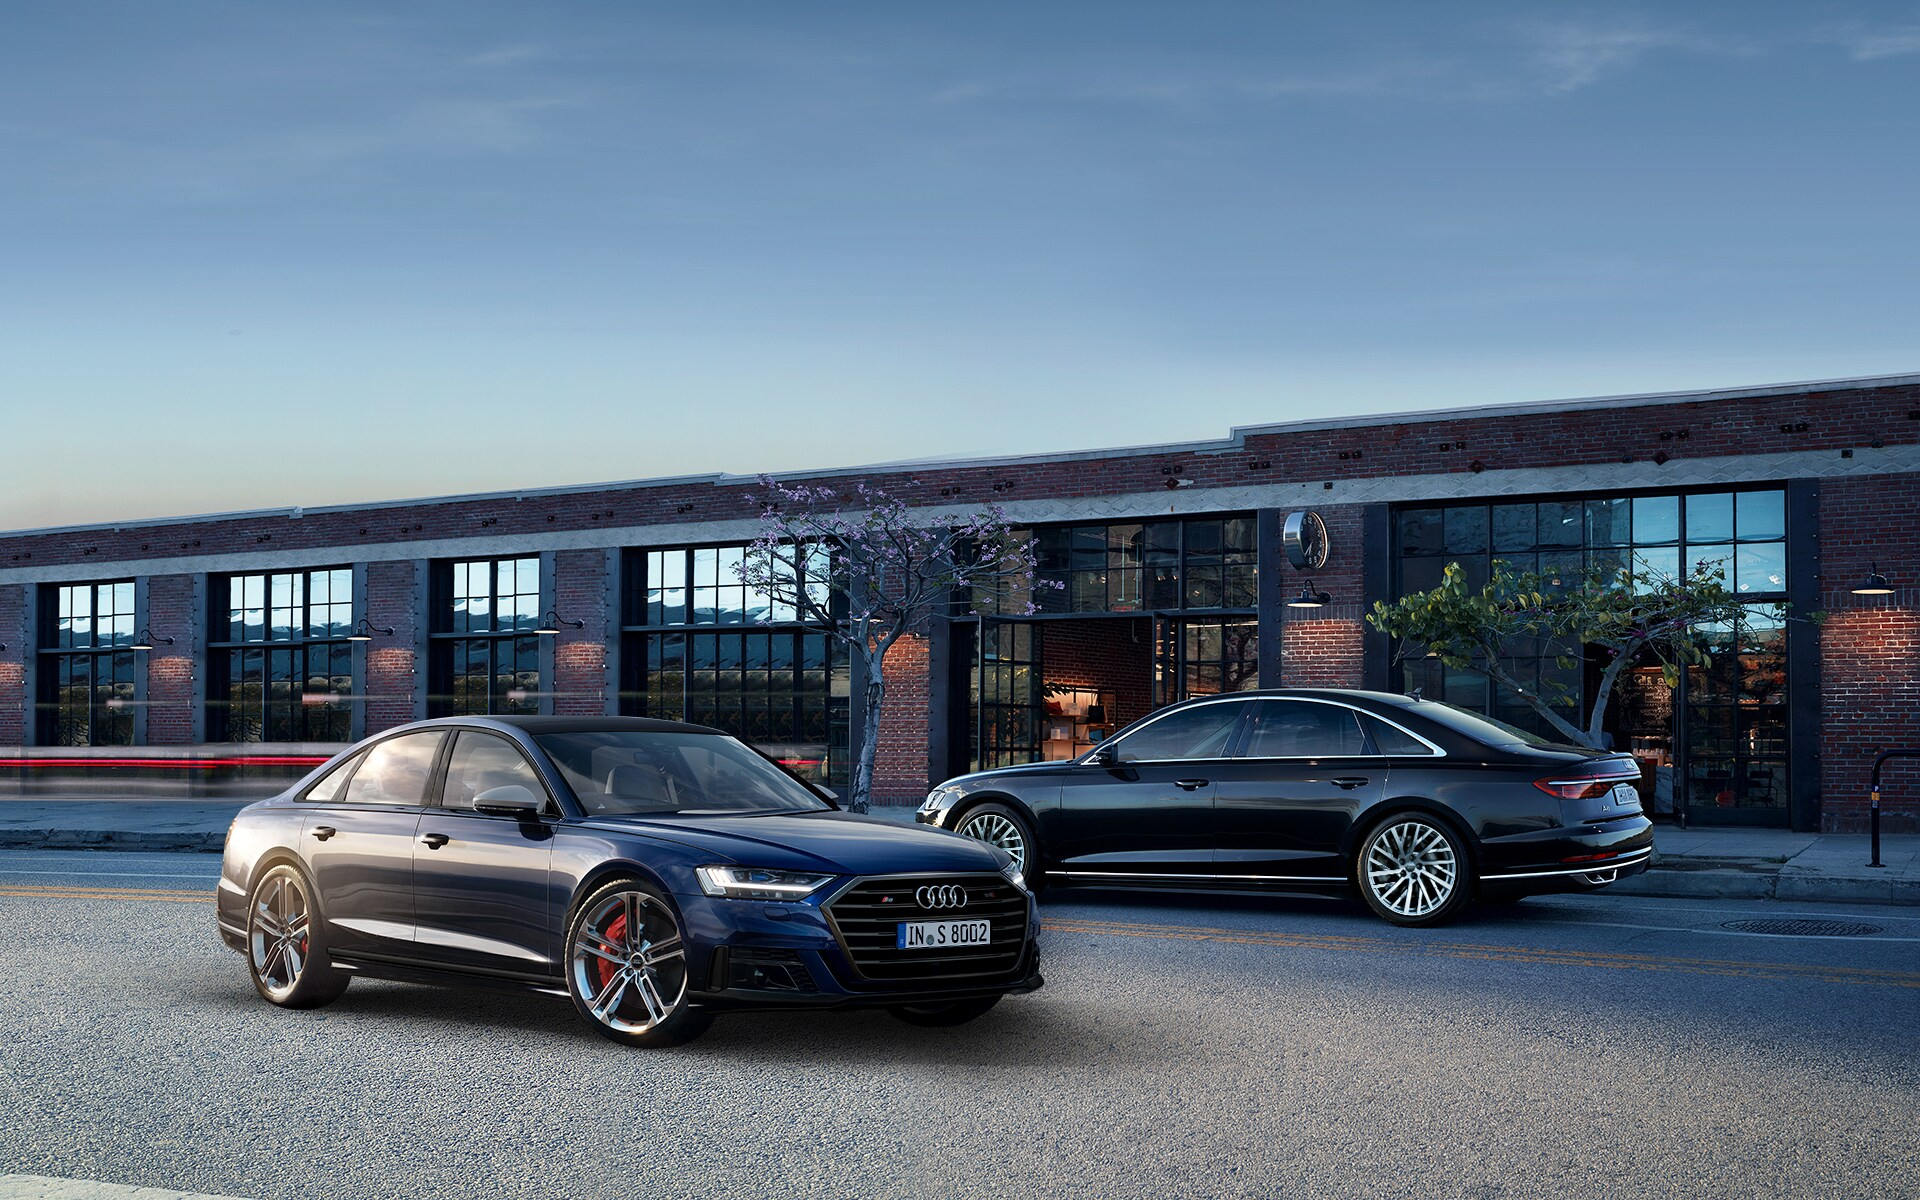 The new Audi S8 L